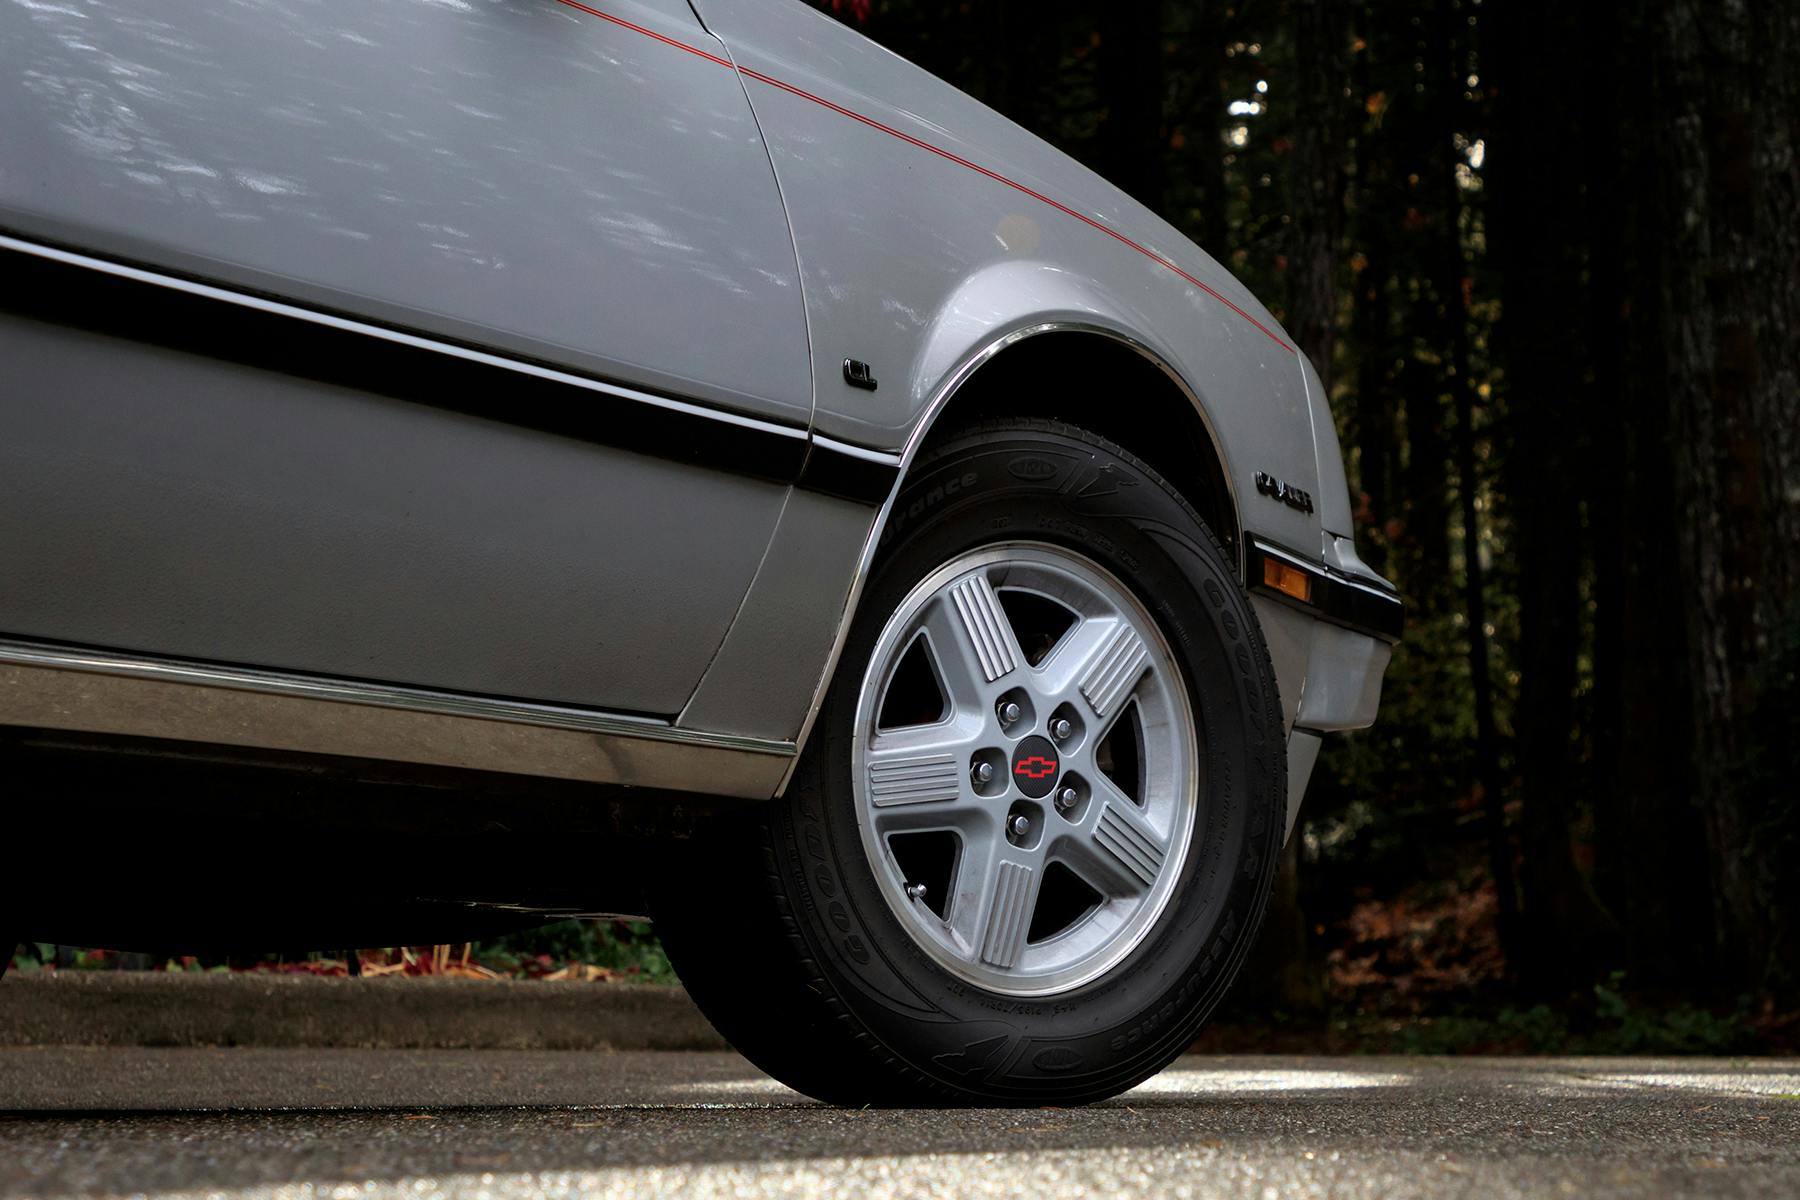 Chevrolet Cavalier front wheel tire